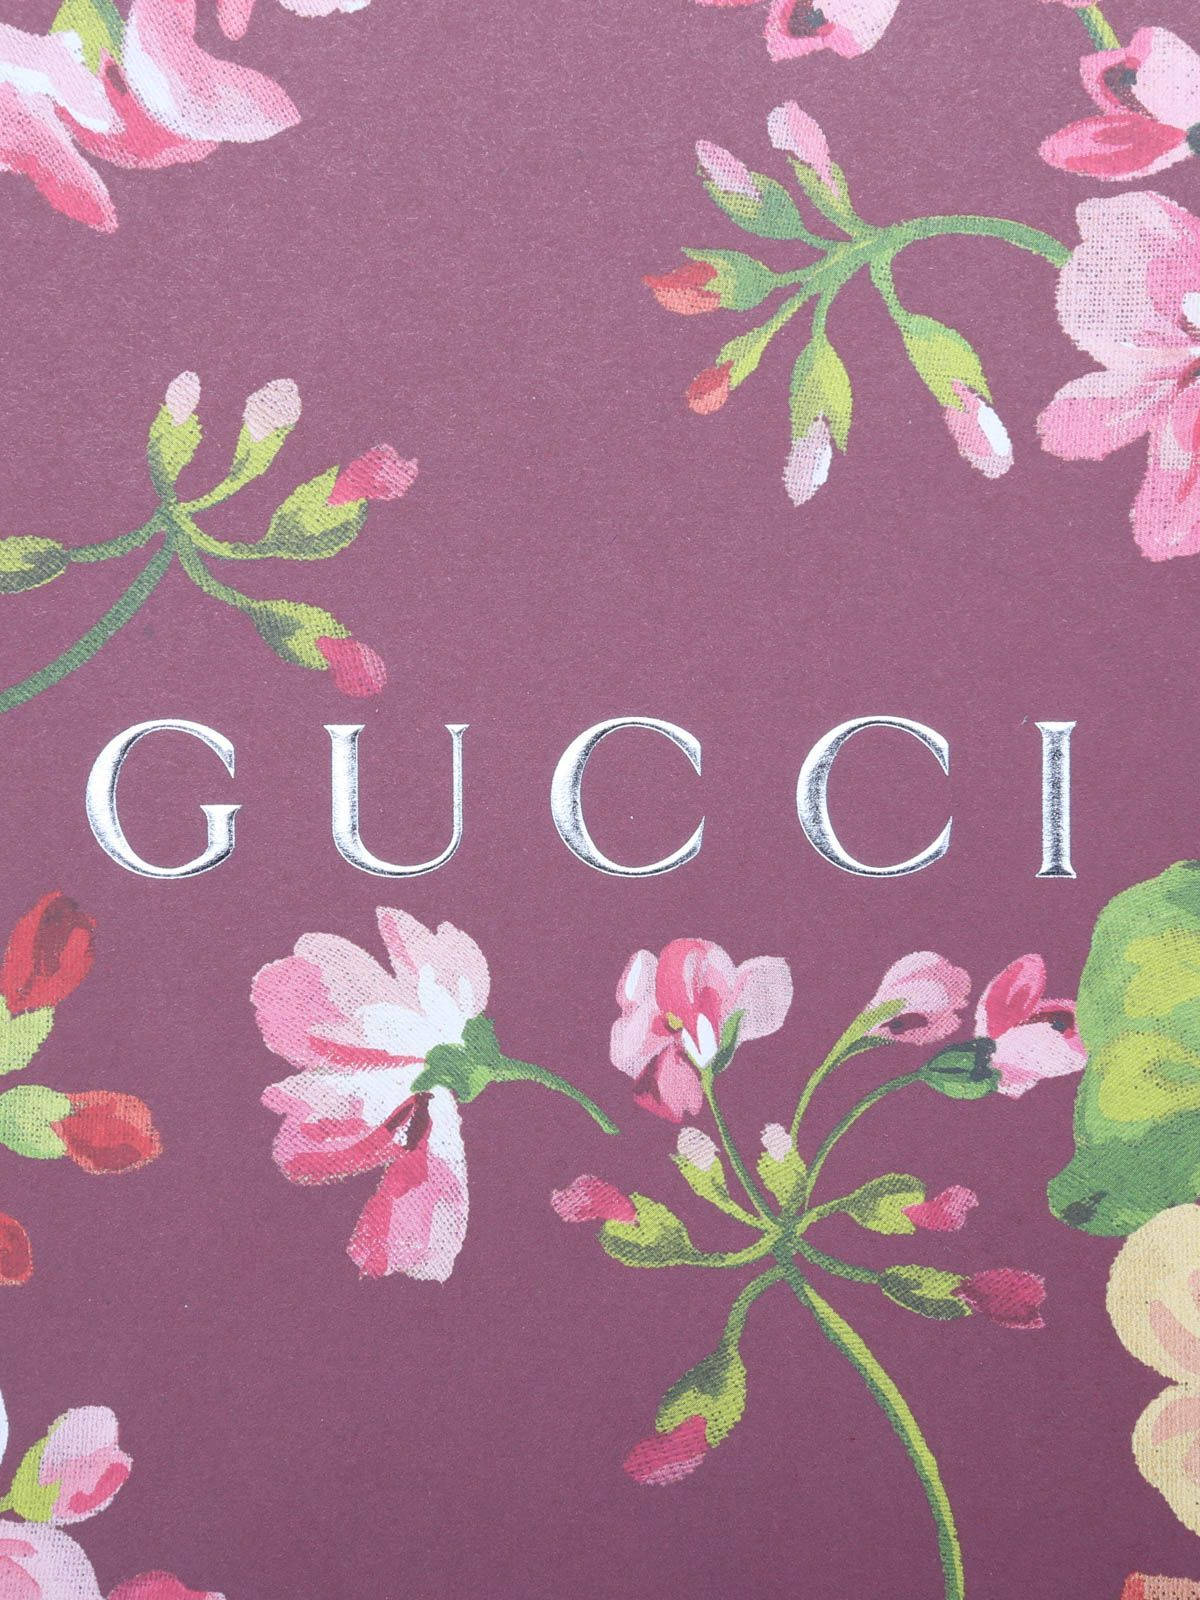 Floral Gucci Pattern Wallpaper